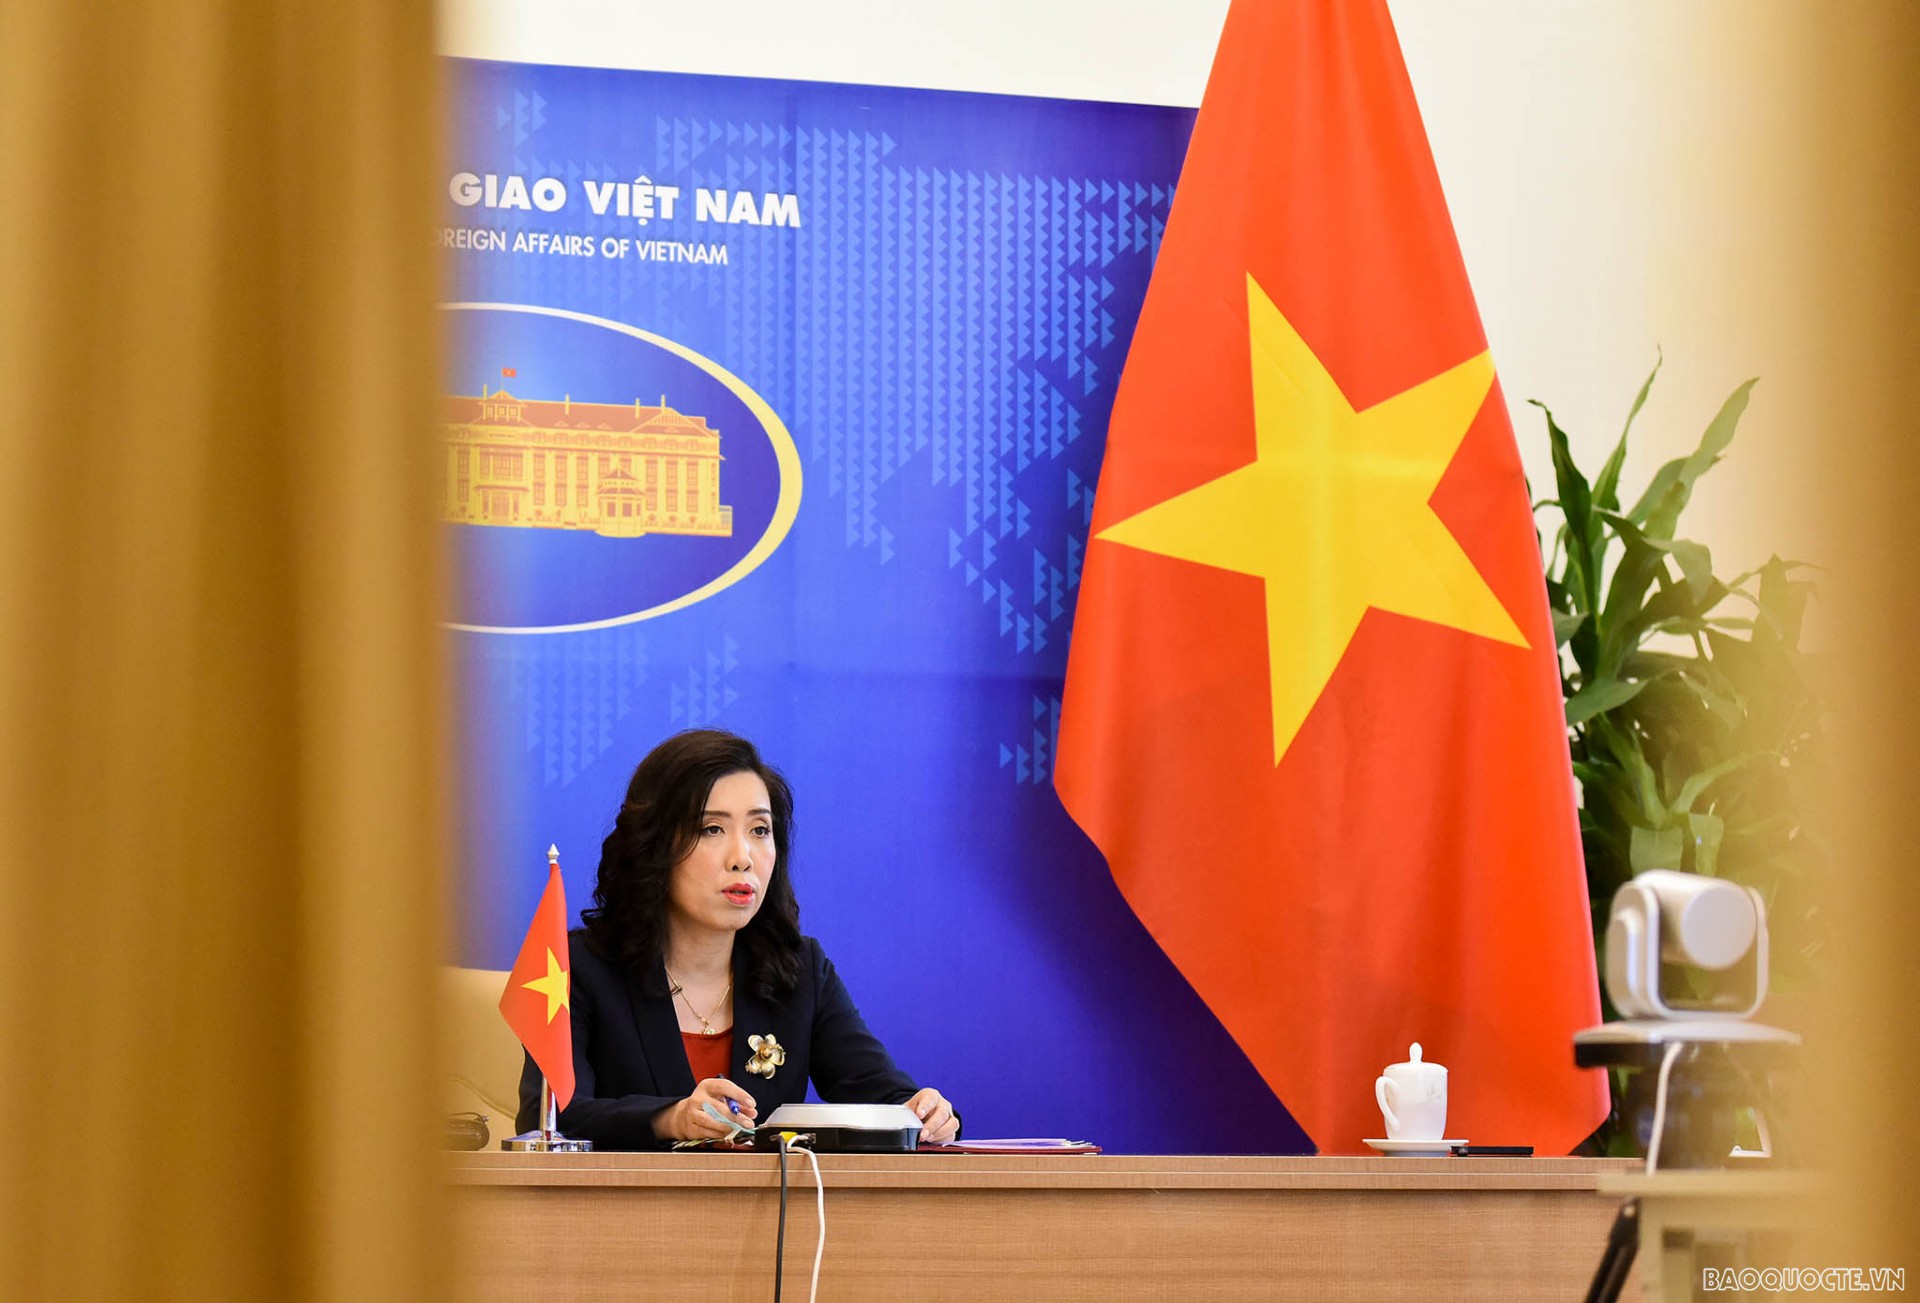 Illegal exploration, survey activities in Hoang Sa violate Vietnam’s sovereignty: Spokeswoman